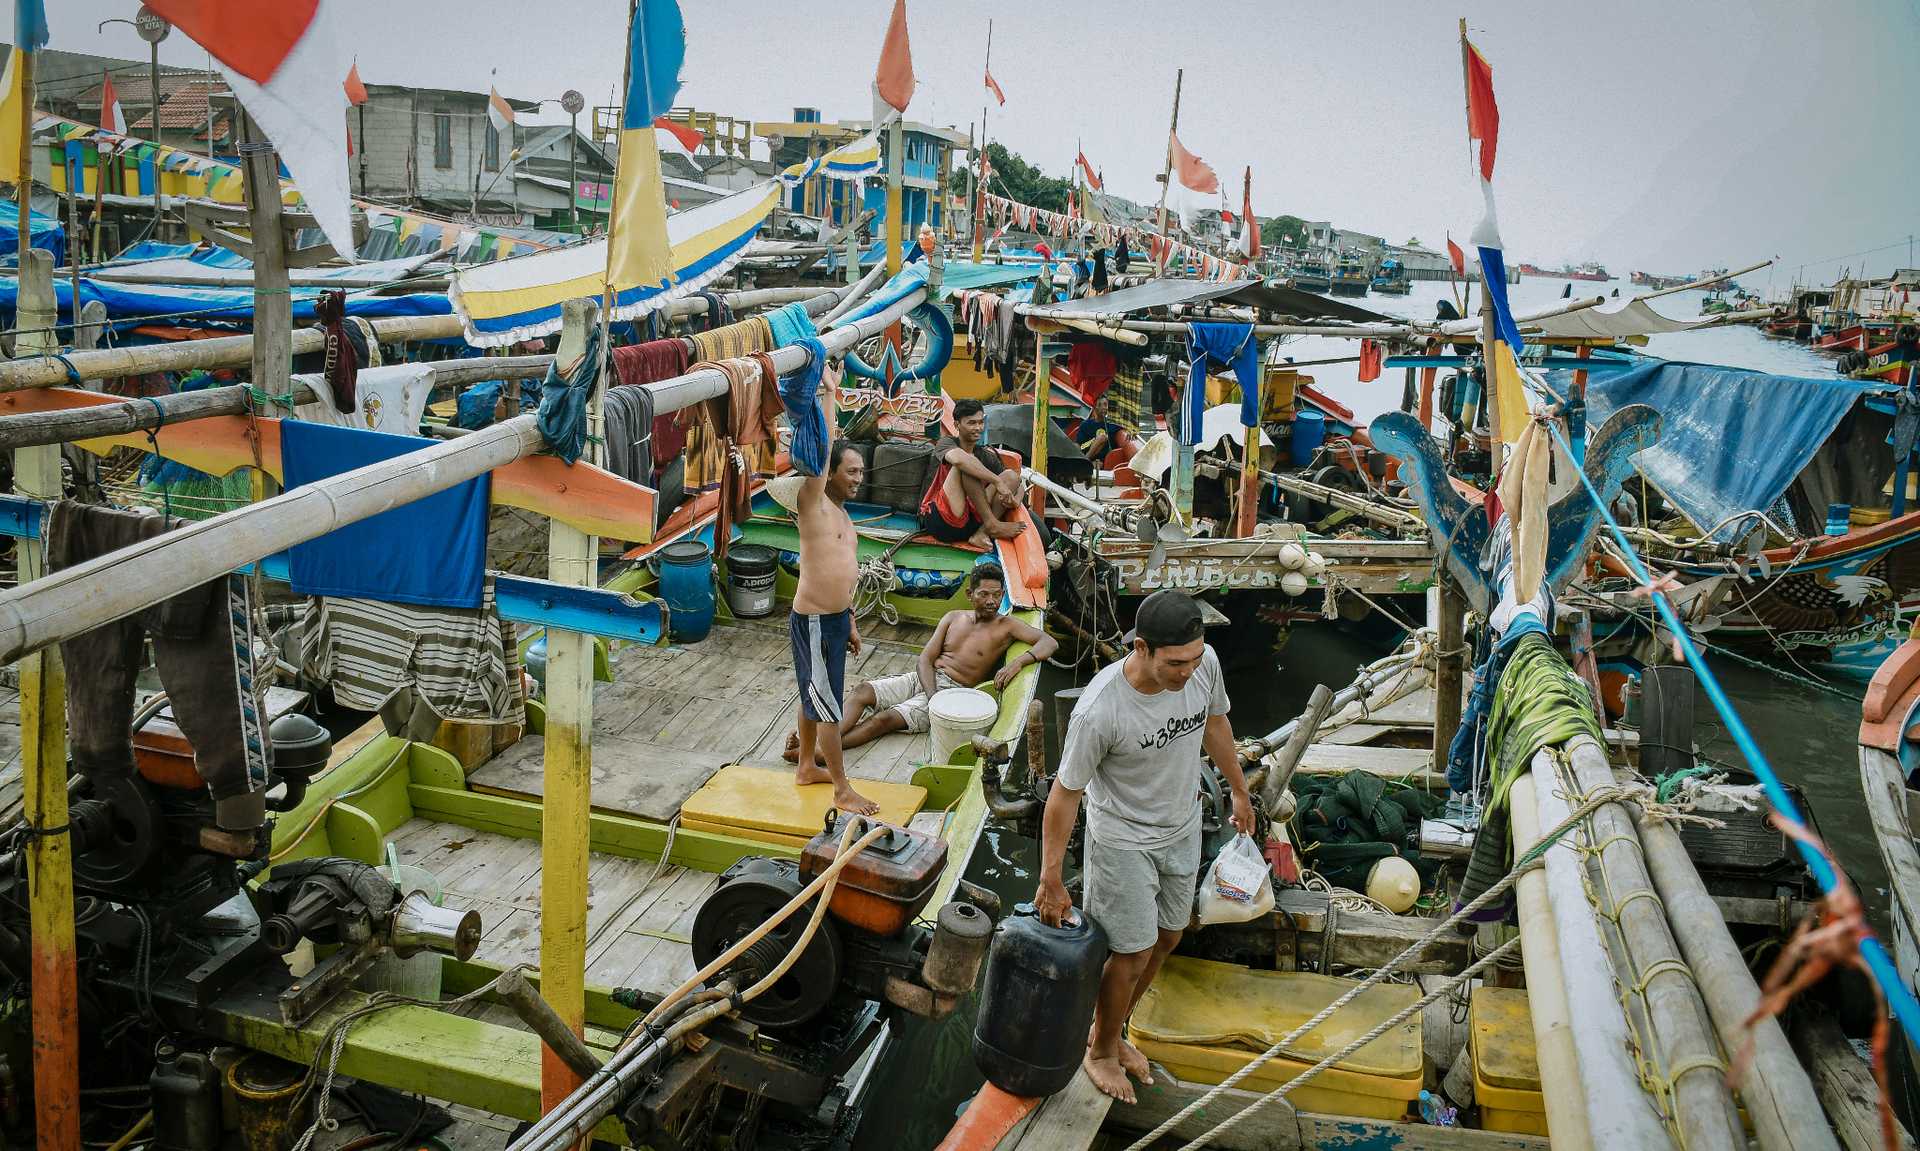 FOTO CERITA: Dampak BBM Naik, Kehidupan Nelayan Semakin Sulit